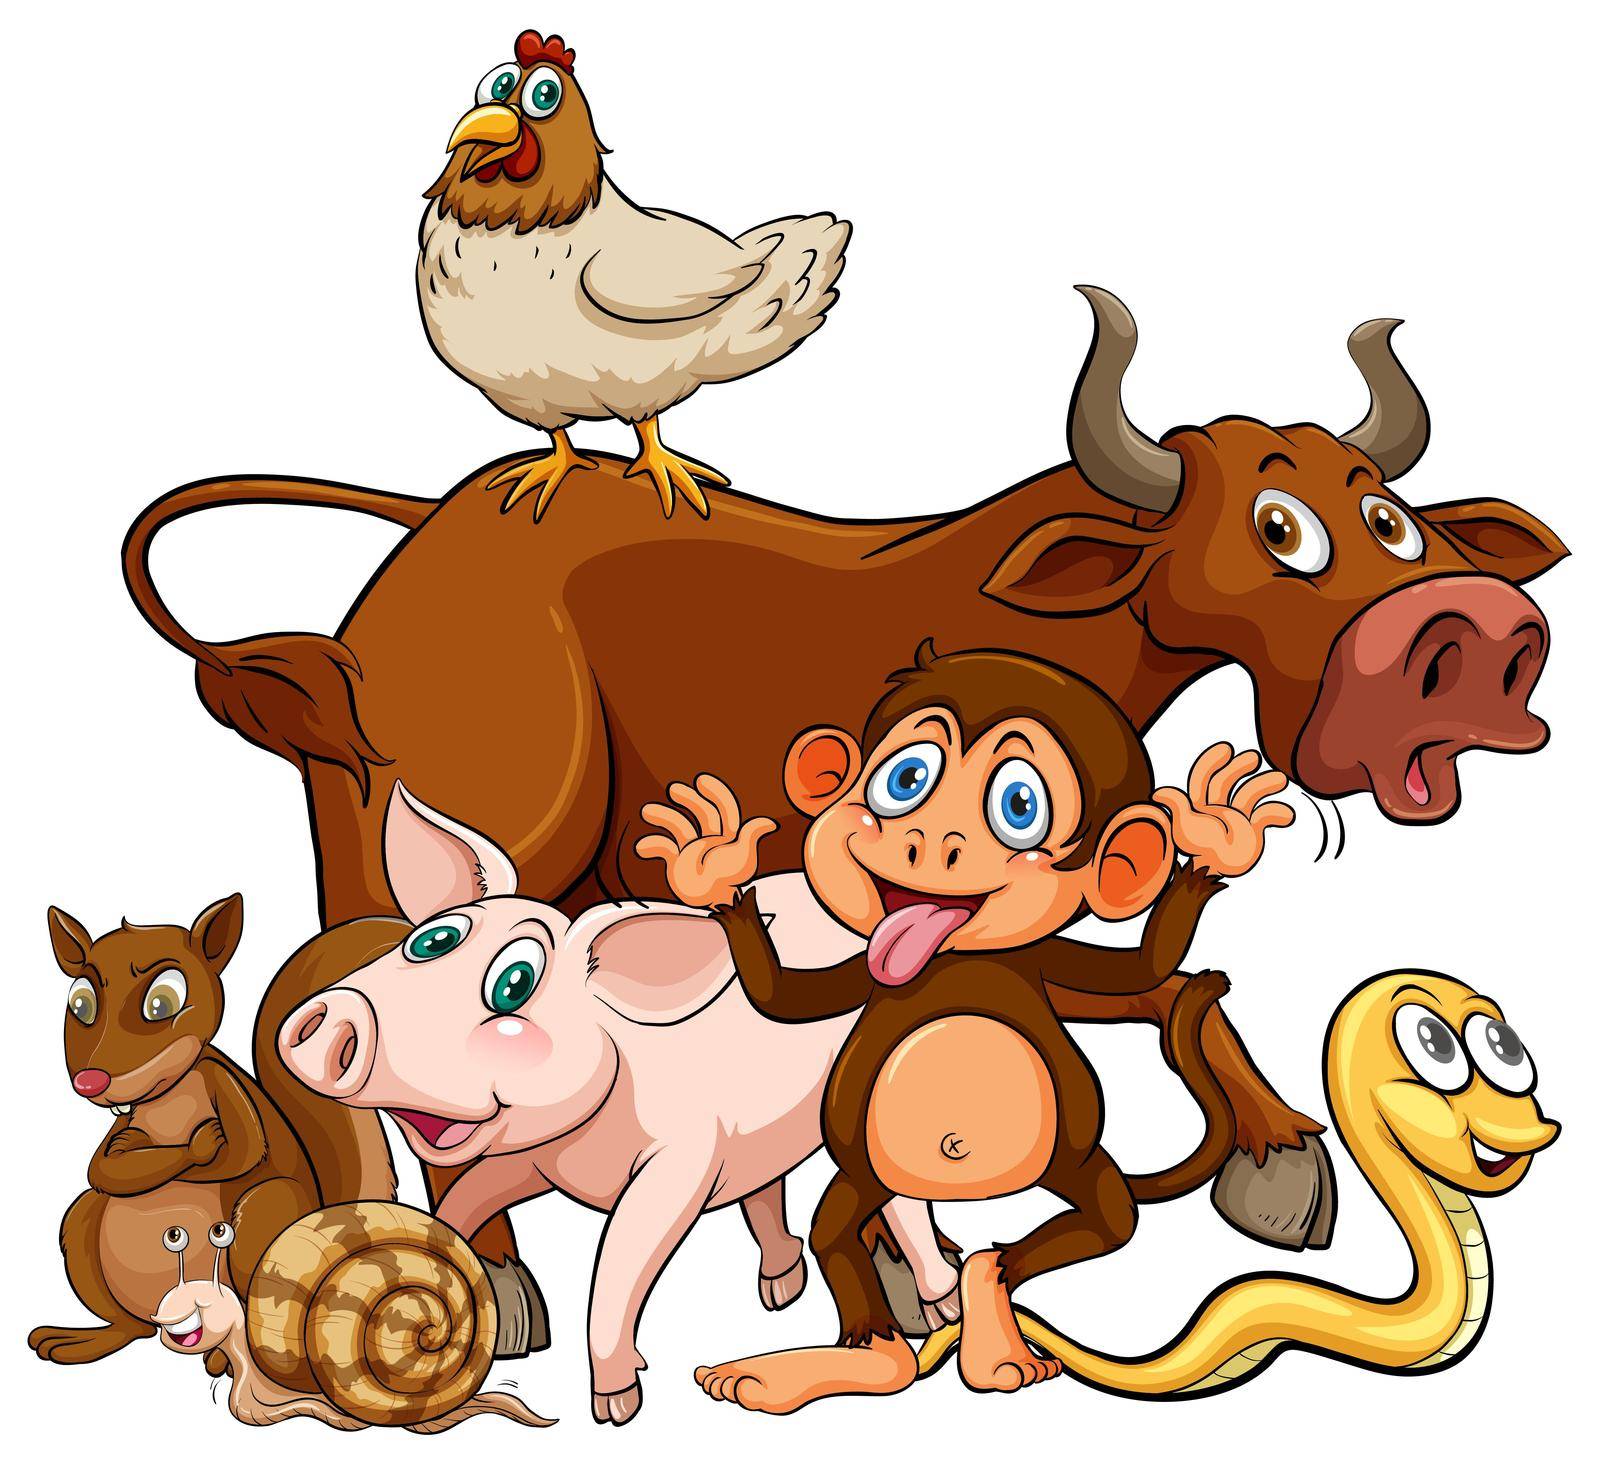 Many farm animals living together